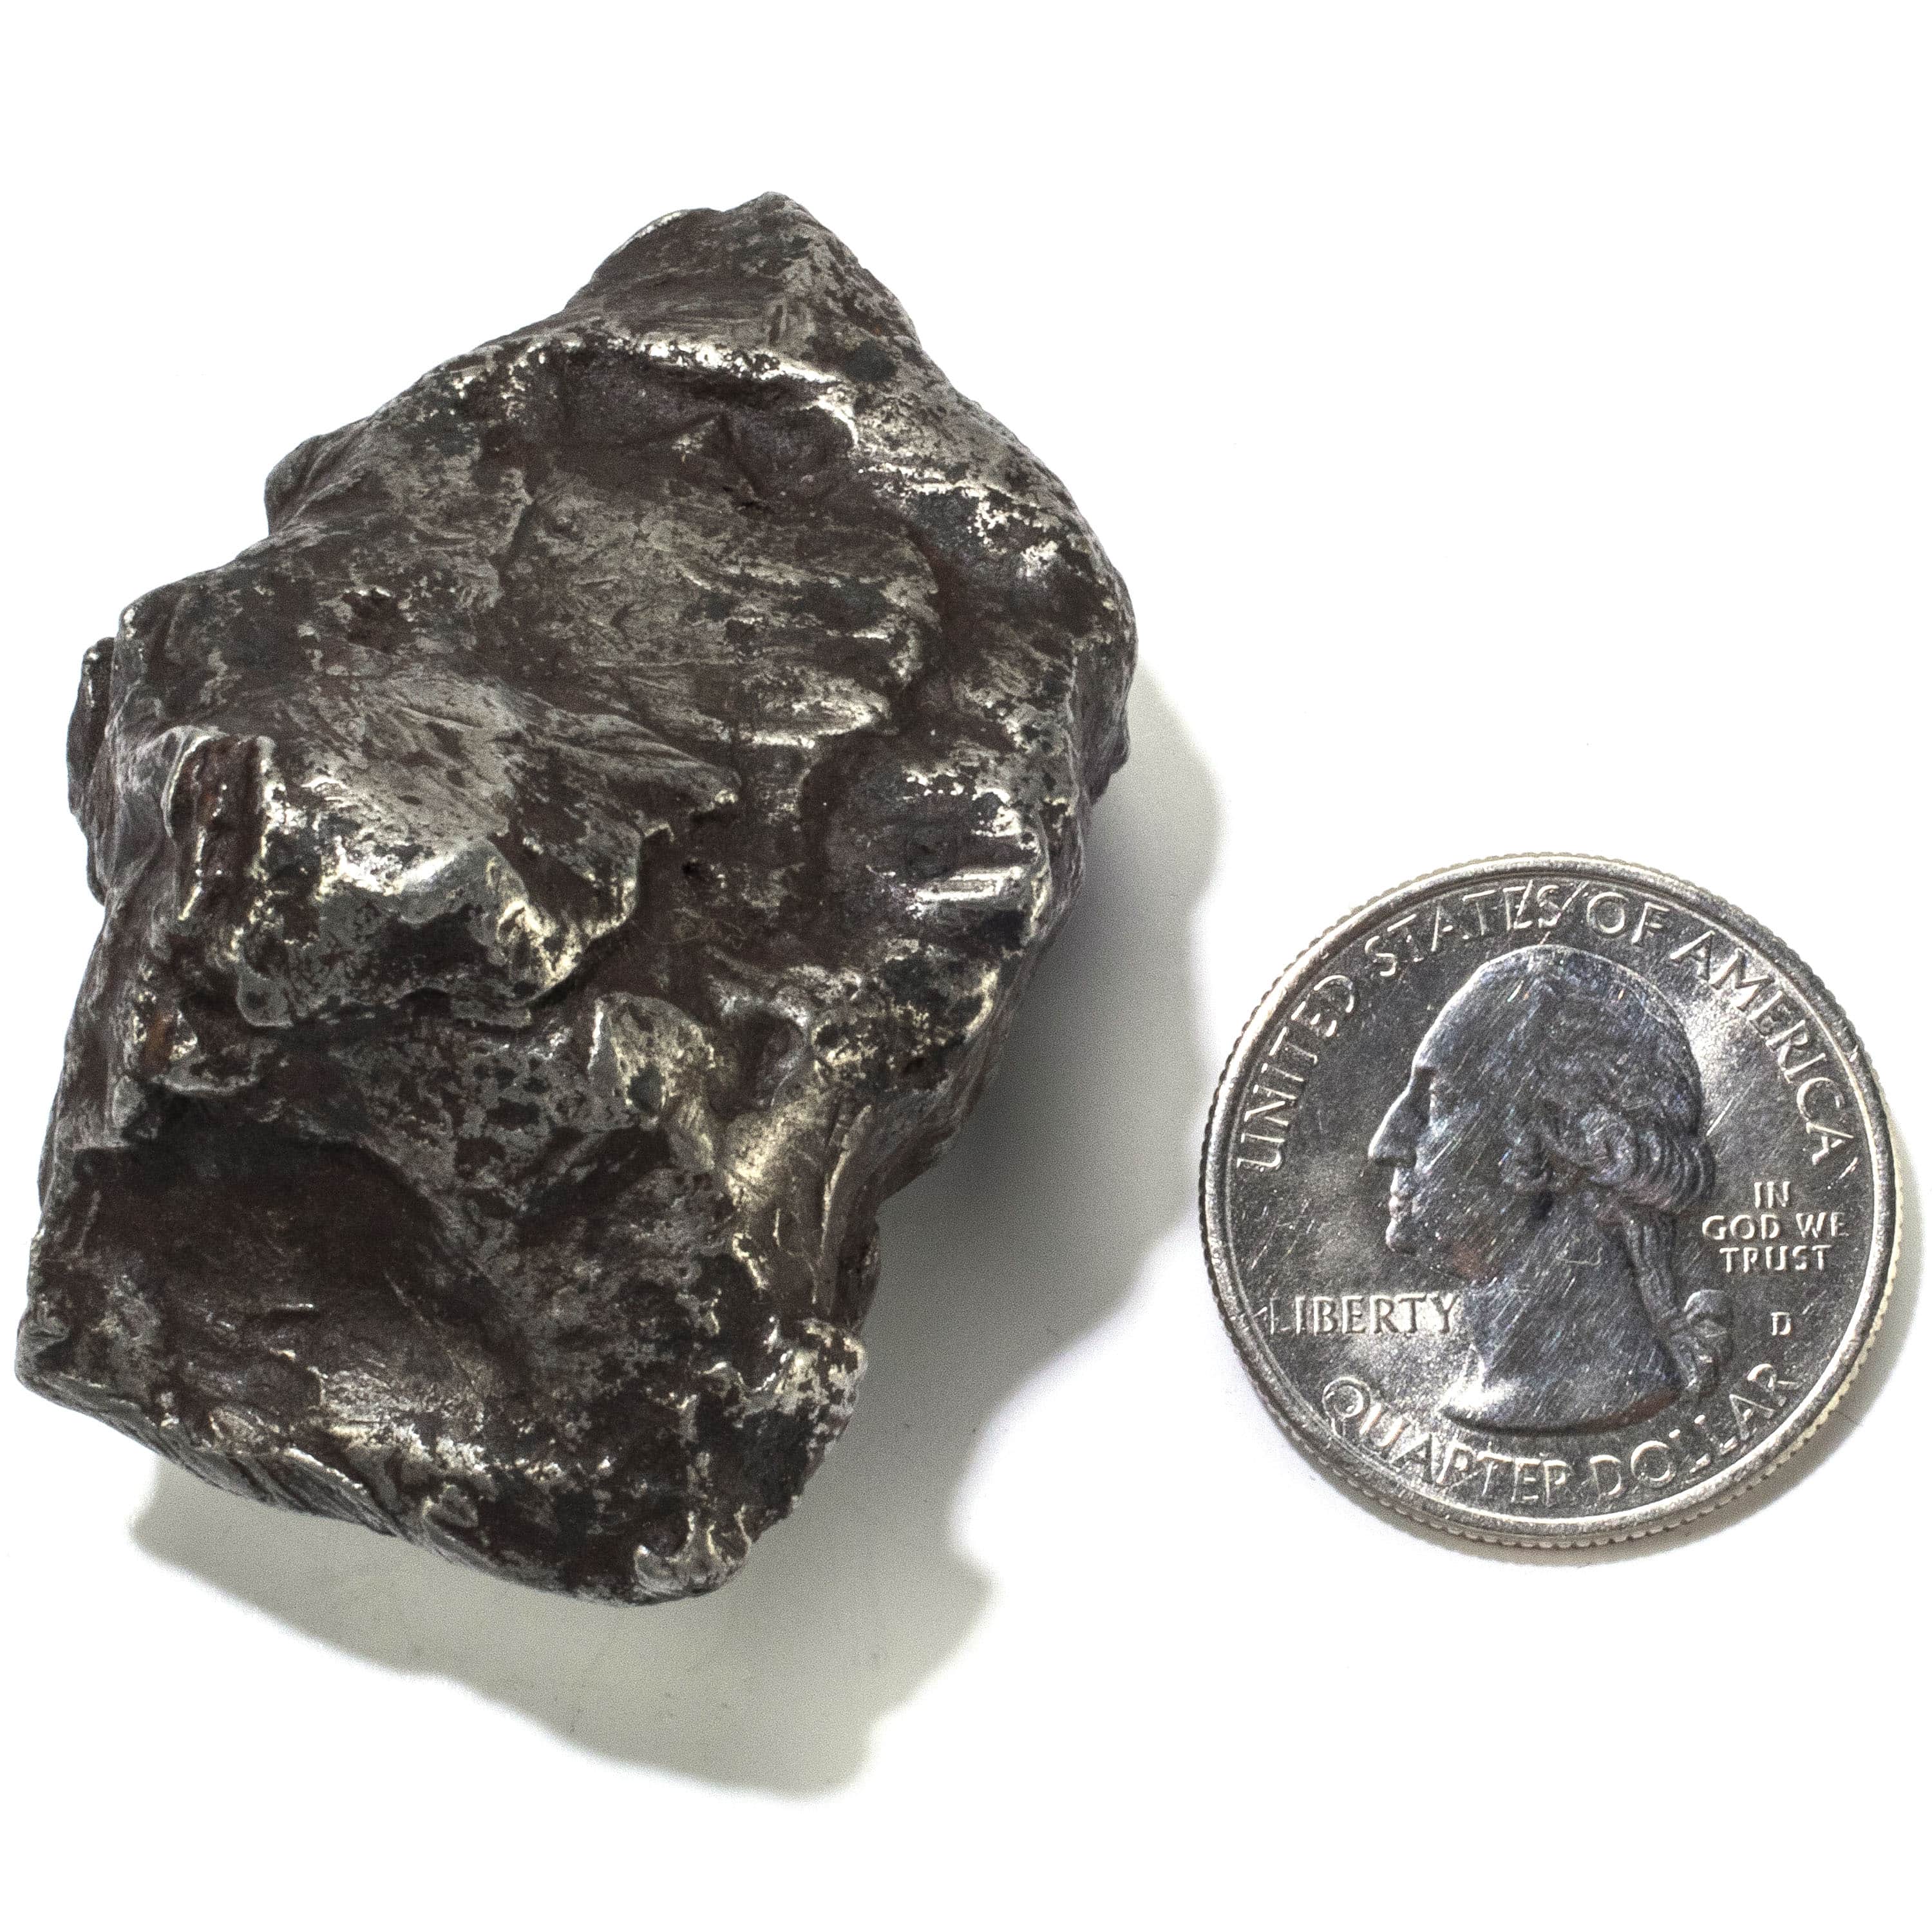 Kalifano Meteorites Natural Sikhote-Alin Meteorite from Russia - 134 grams / 2" MTS2400.011